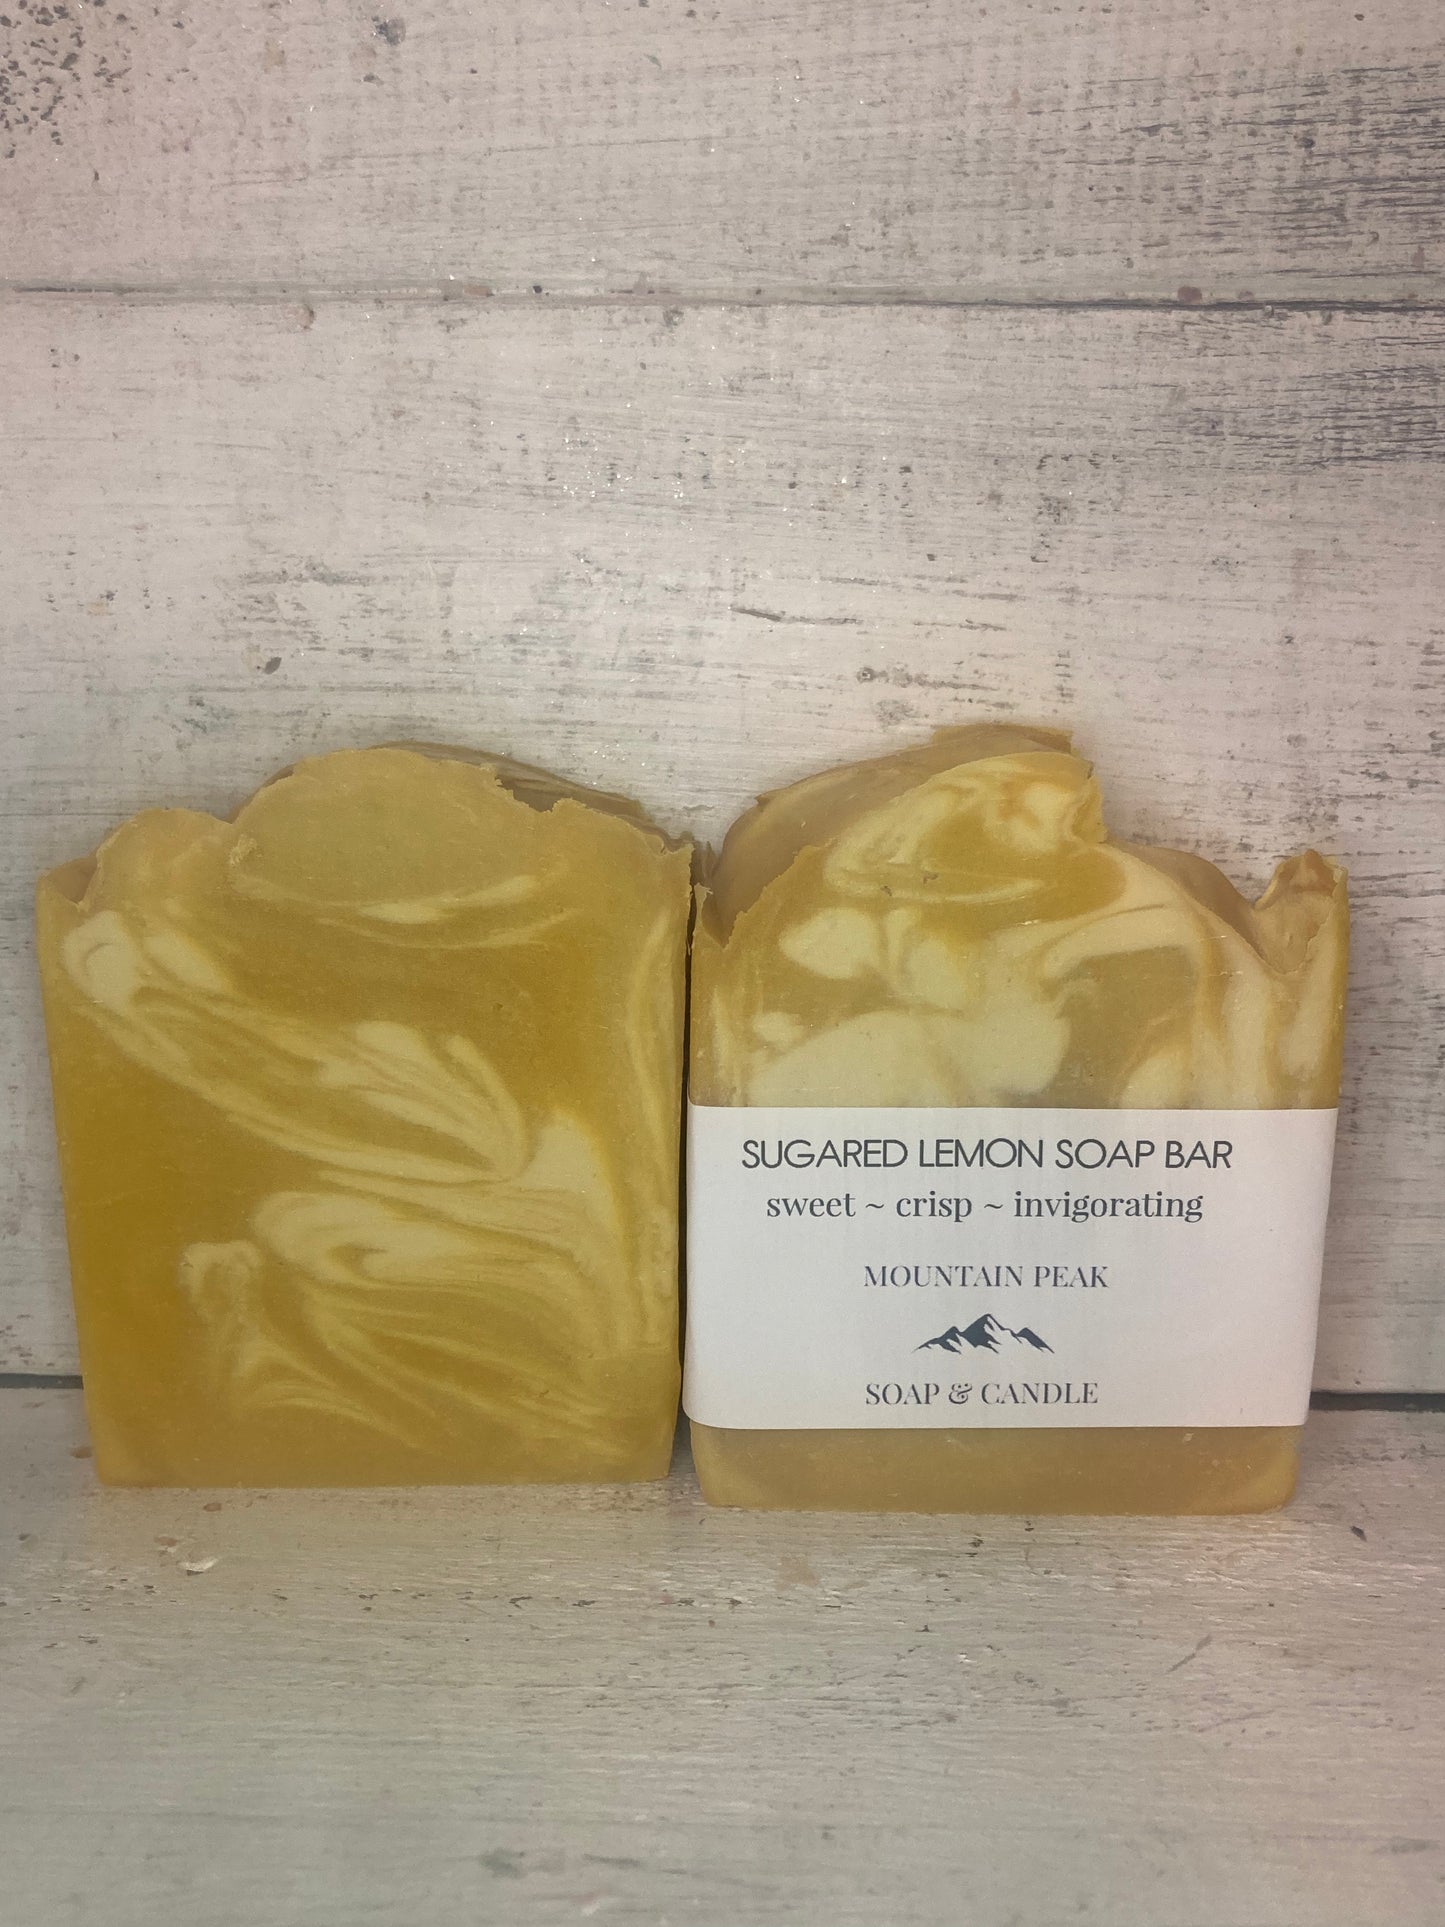 Sugared lemon soap bar